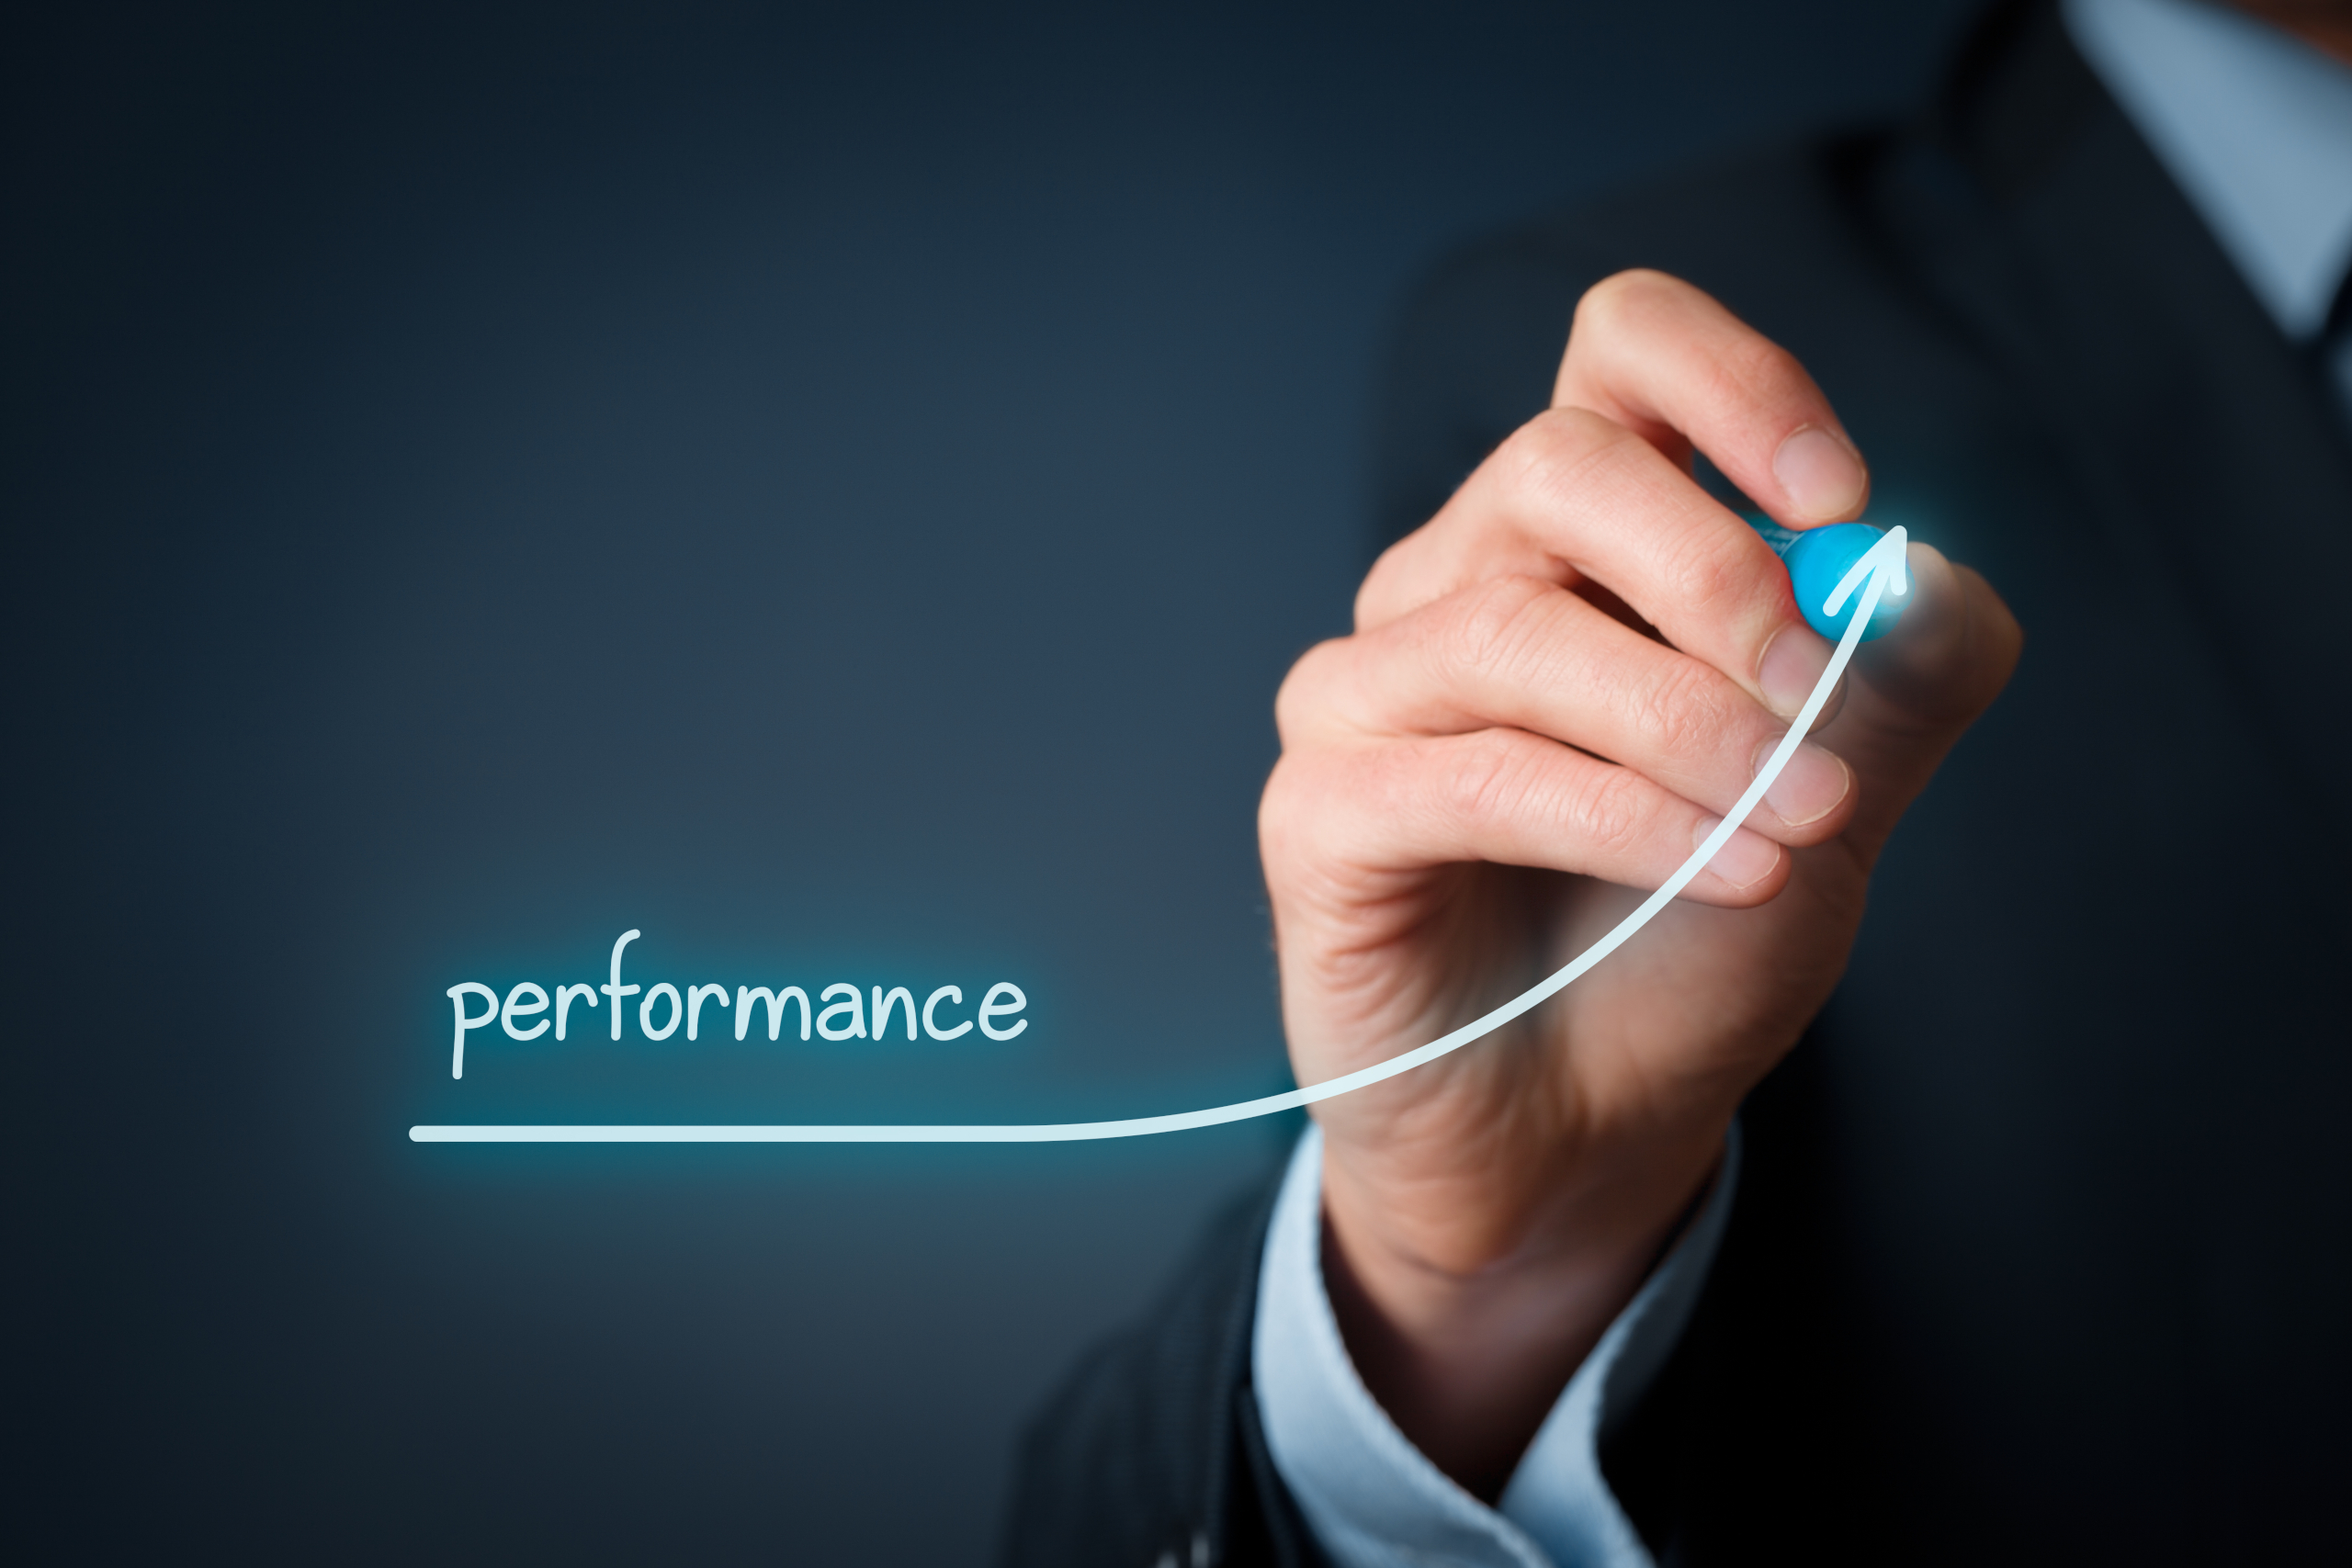 improve business performance - practice exchange